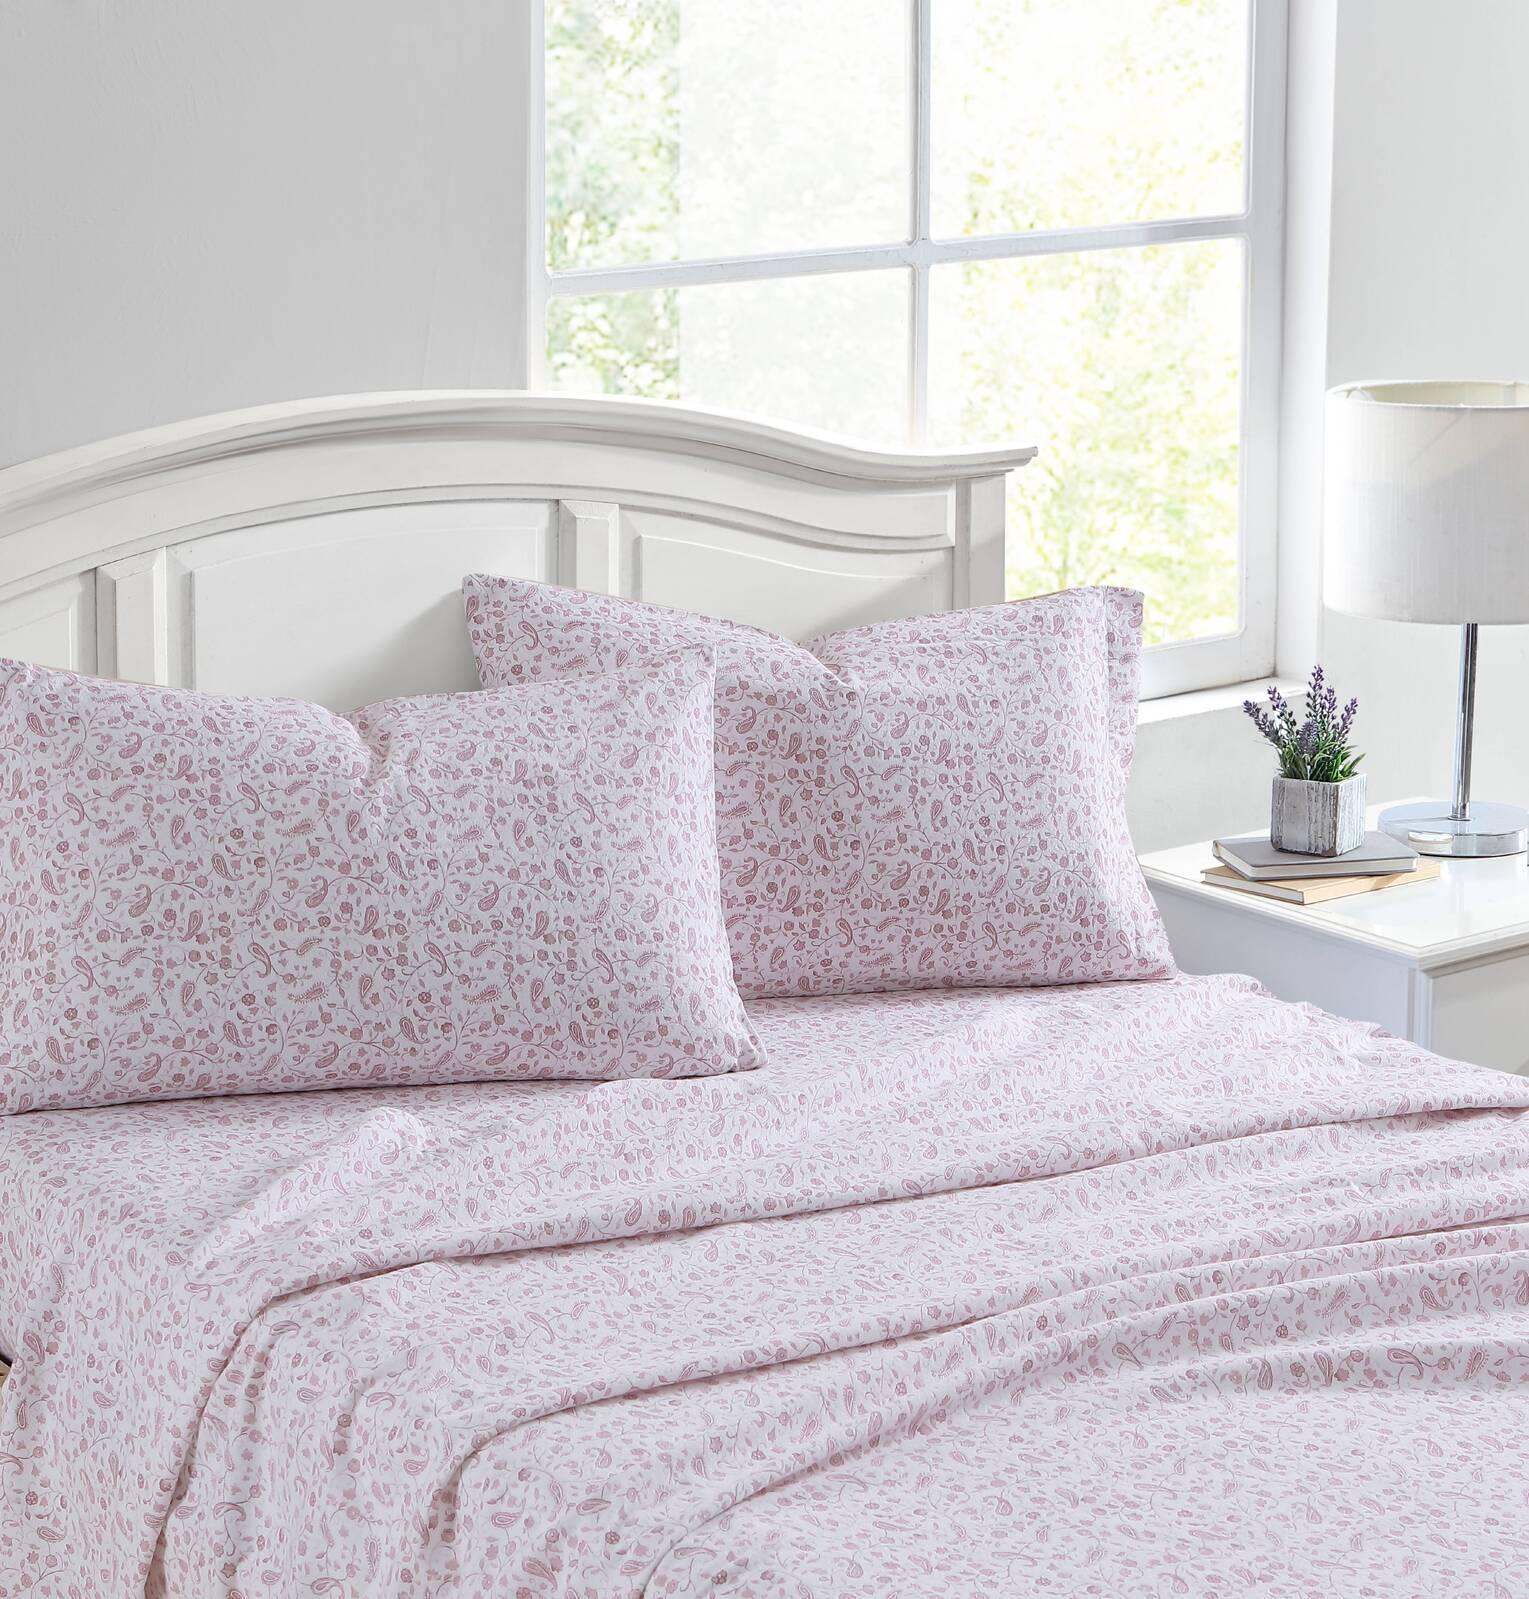 Laura Ashley Paisley King Size Bed Flannelette Sheet Set w/ 2x Pillowcase Rose